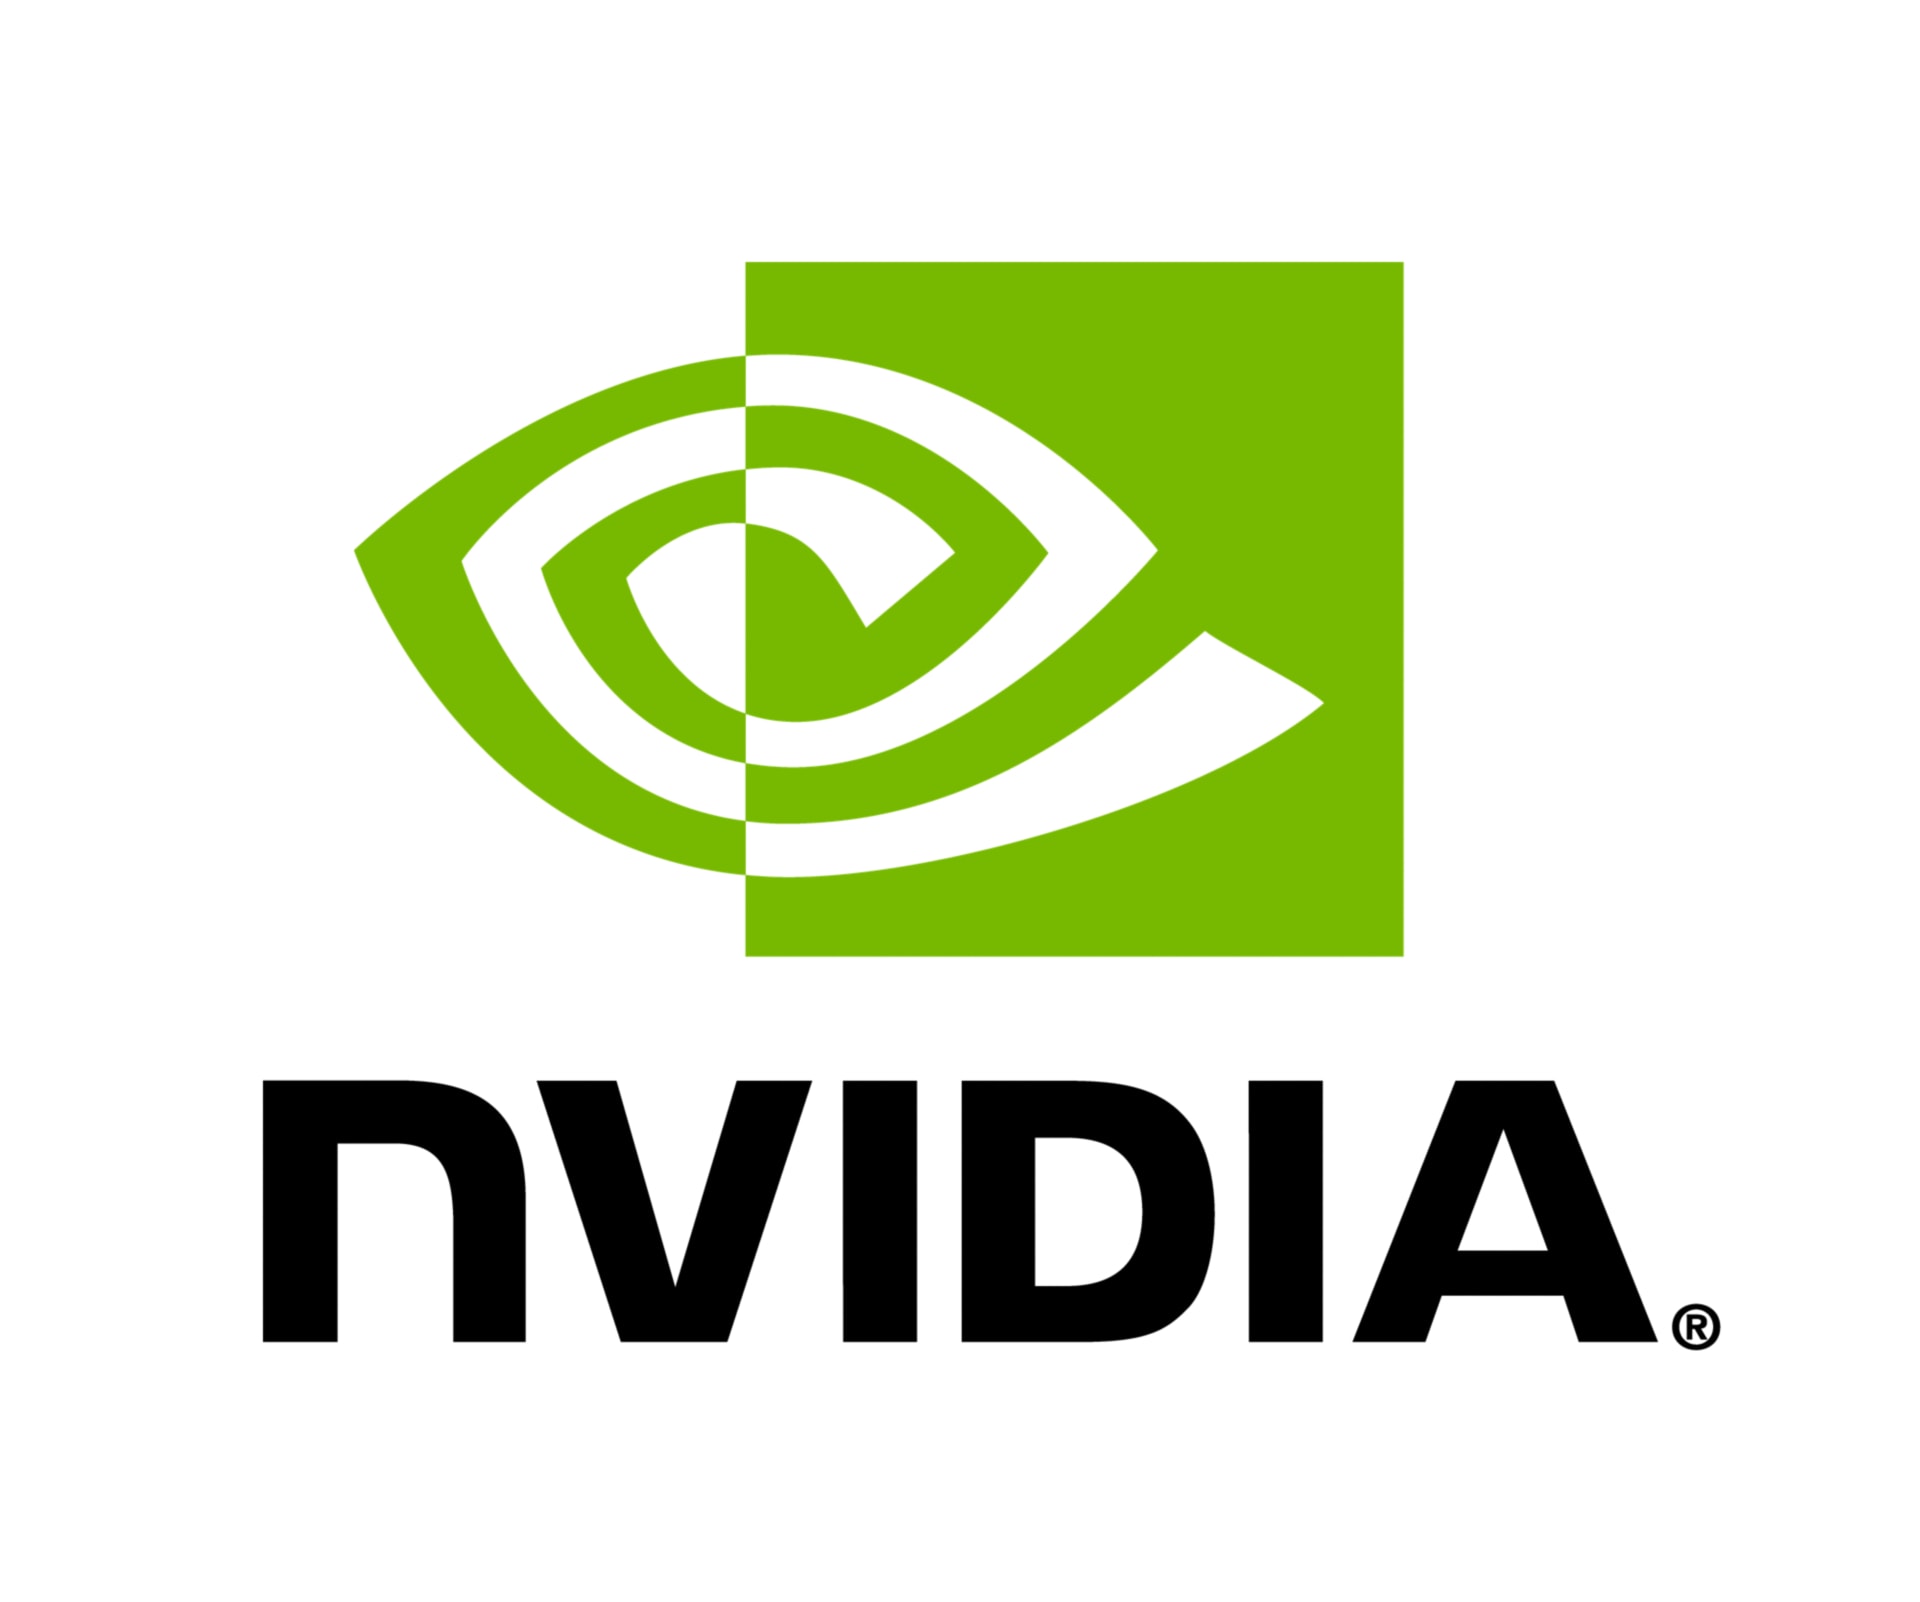 NVIDIA Grid Quadro Virtual Data Center Workstation - subscription license renewal (18 months) - 1 concurrent user